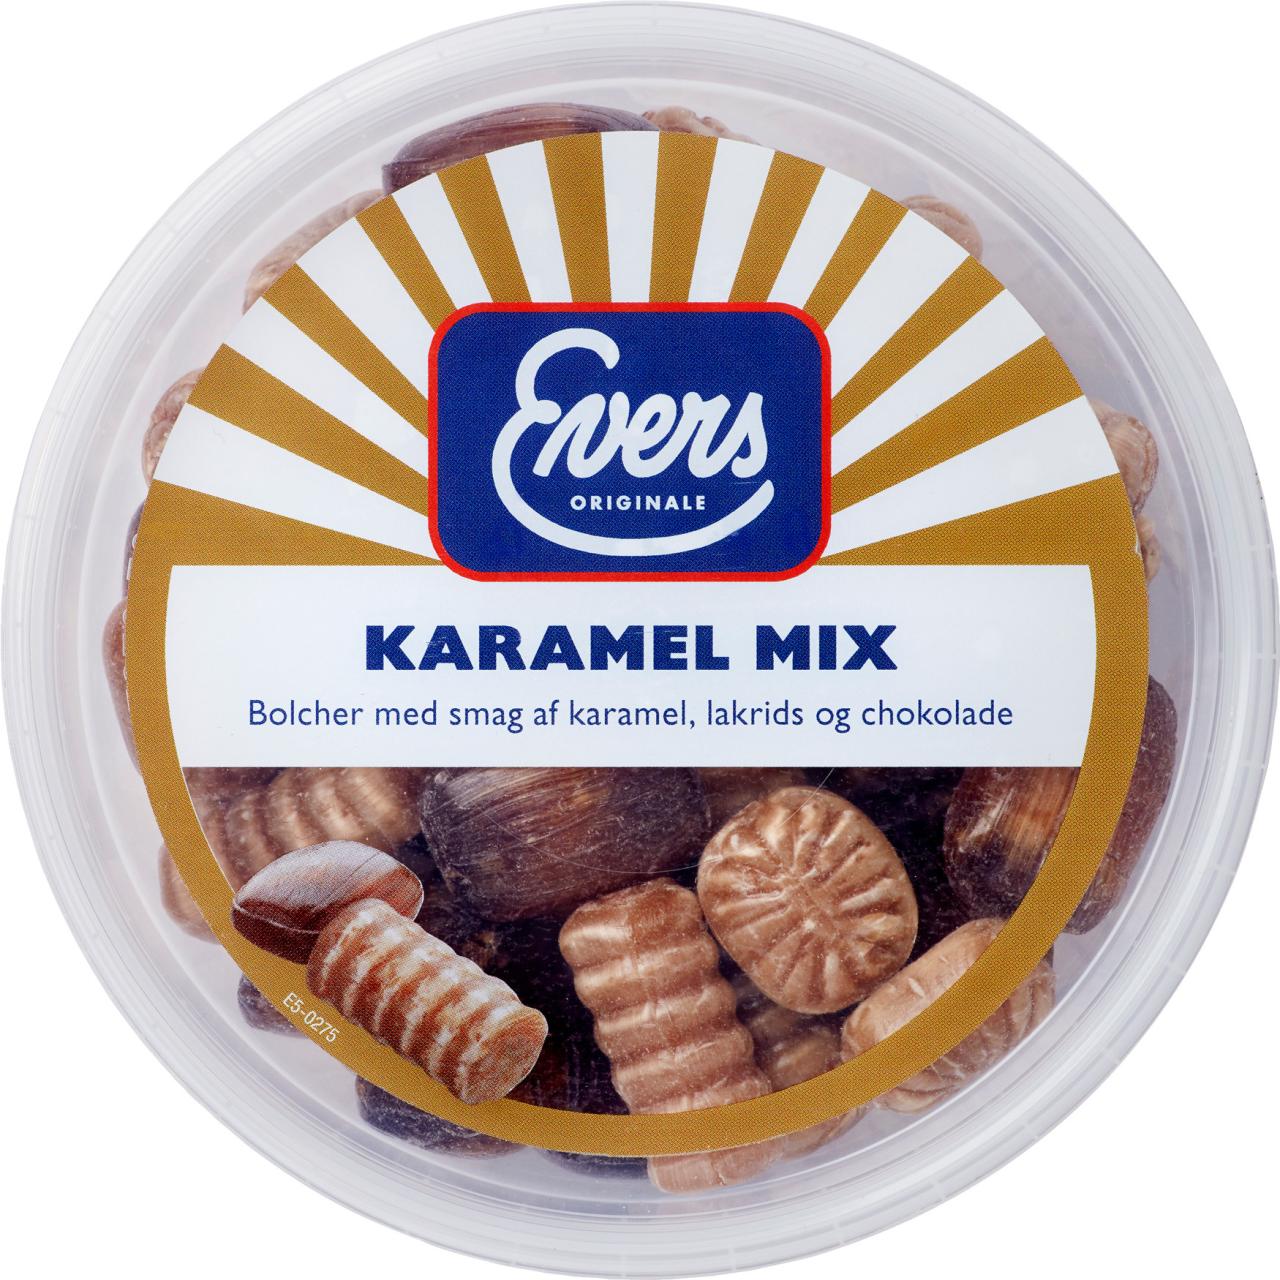 Evers Karamel Mix 180g